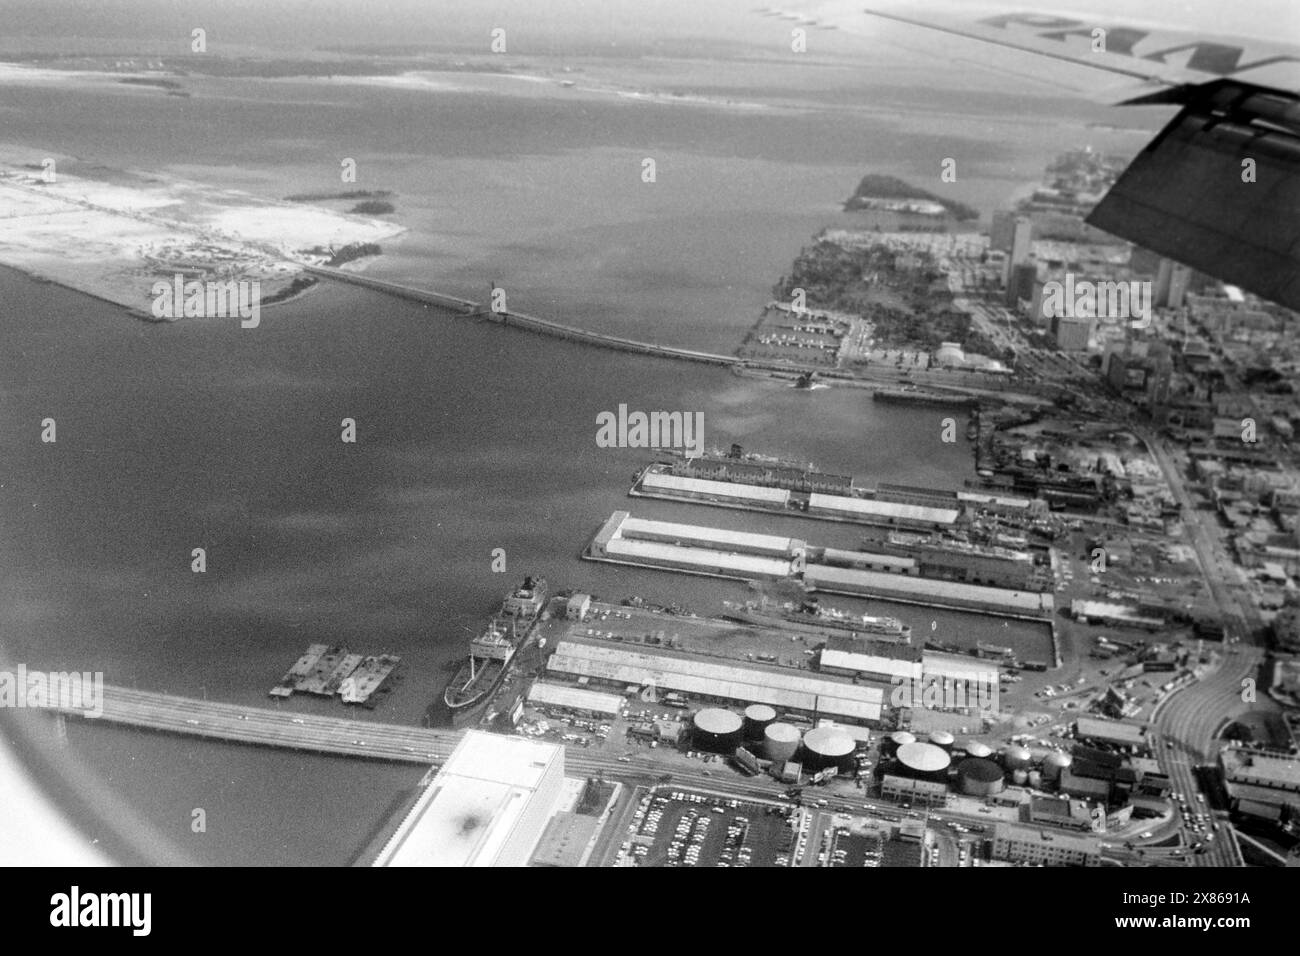 Blick auf den Hafen von Miami und die damals kaum bebaute künstlich angelegte Dodge Island in der Biscayne Bay aus dem Fenster einer Pan am Maschine, Floride 1966. Vue du port de Miami et de l'île artificielle à peine développée Dodge Island dans la baie de Biscayne depuis la fenêtre d'un avion Pan Am, Floride 1966. Banque D'Images